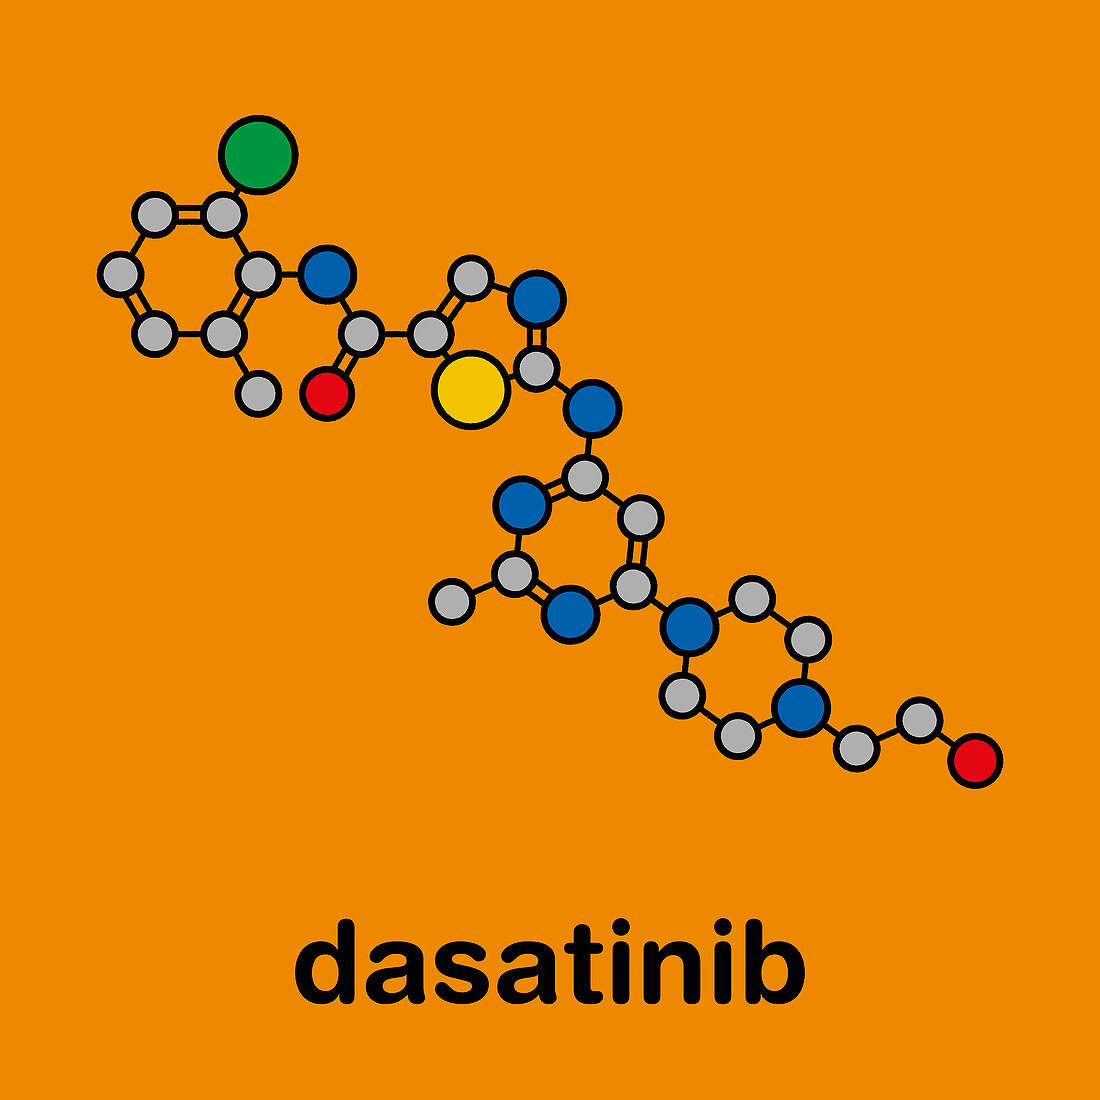 Dasatinib cancer drug molecule, illustration